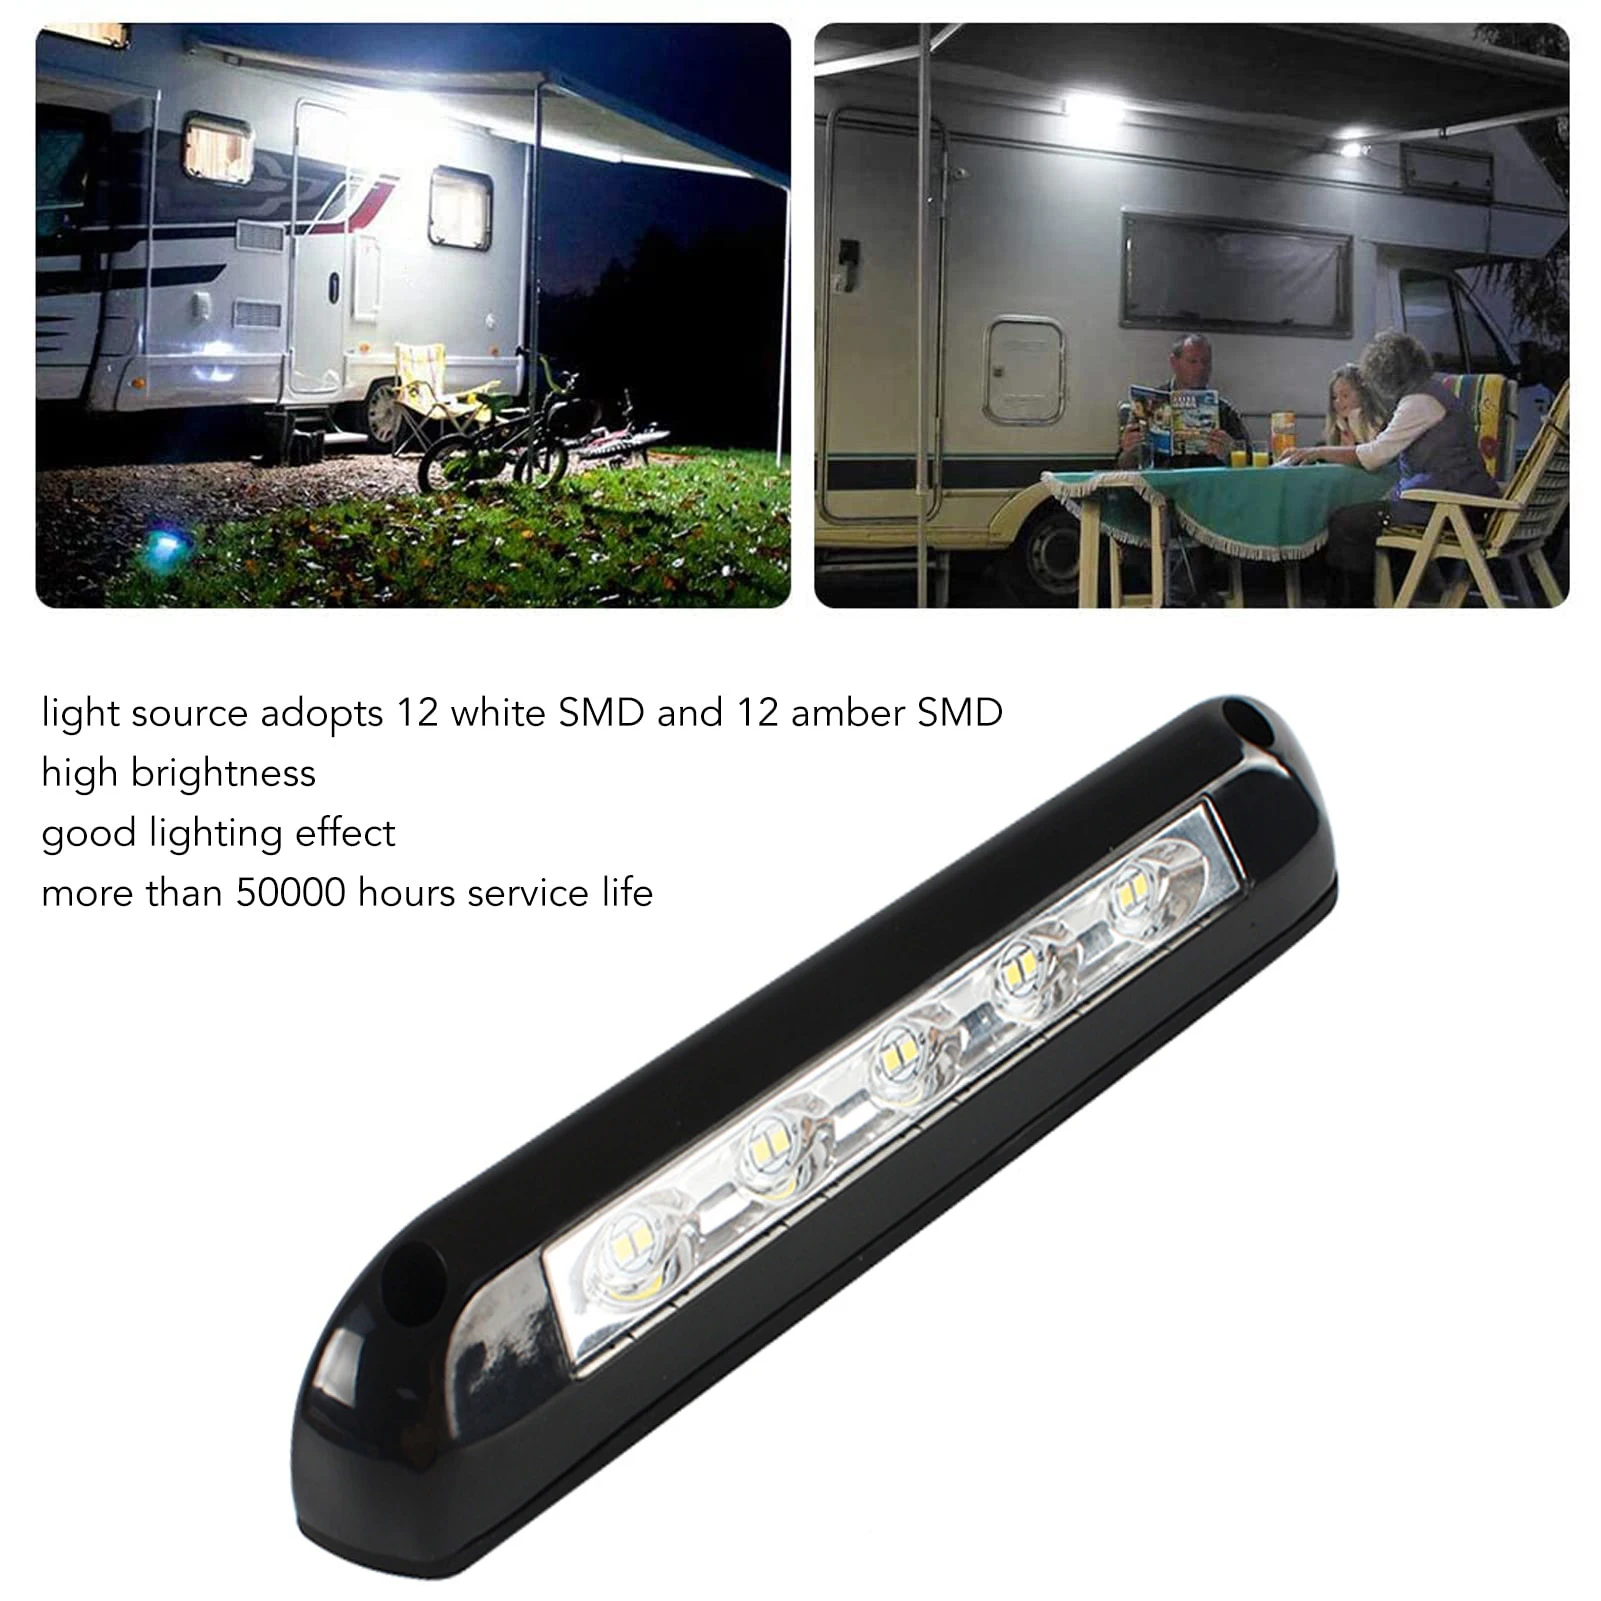 12V/24V RV LED Markise Veranda Licht Wasserdicht Wohnmobil Caravan Innen  Wand Lampen Licht Bar RV